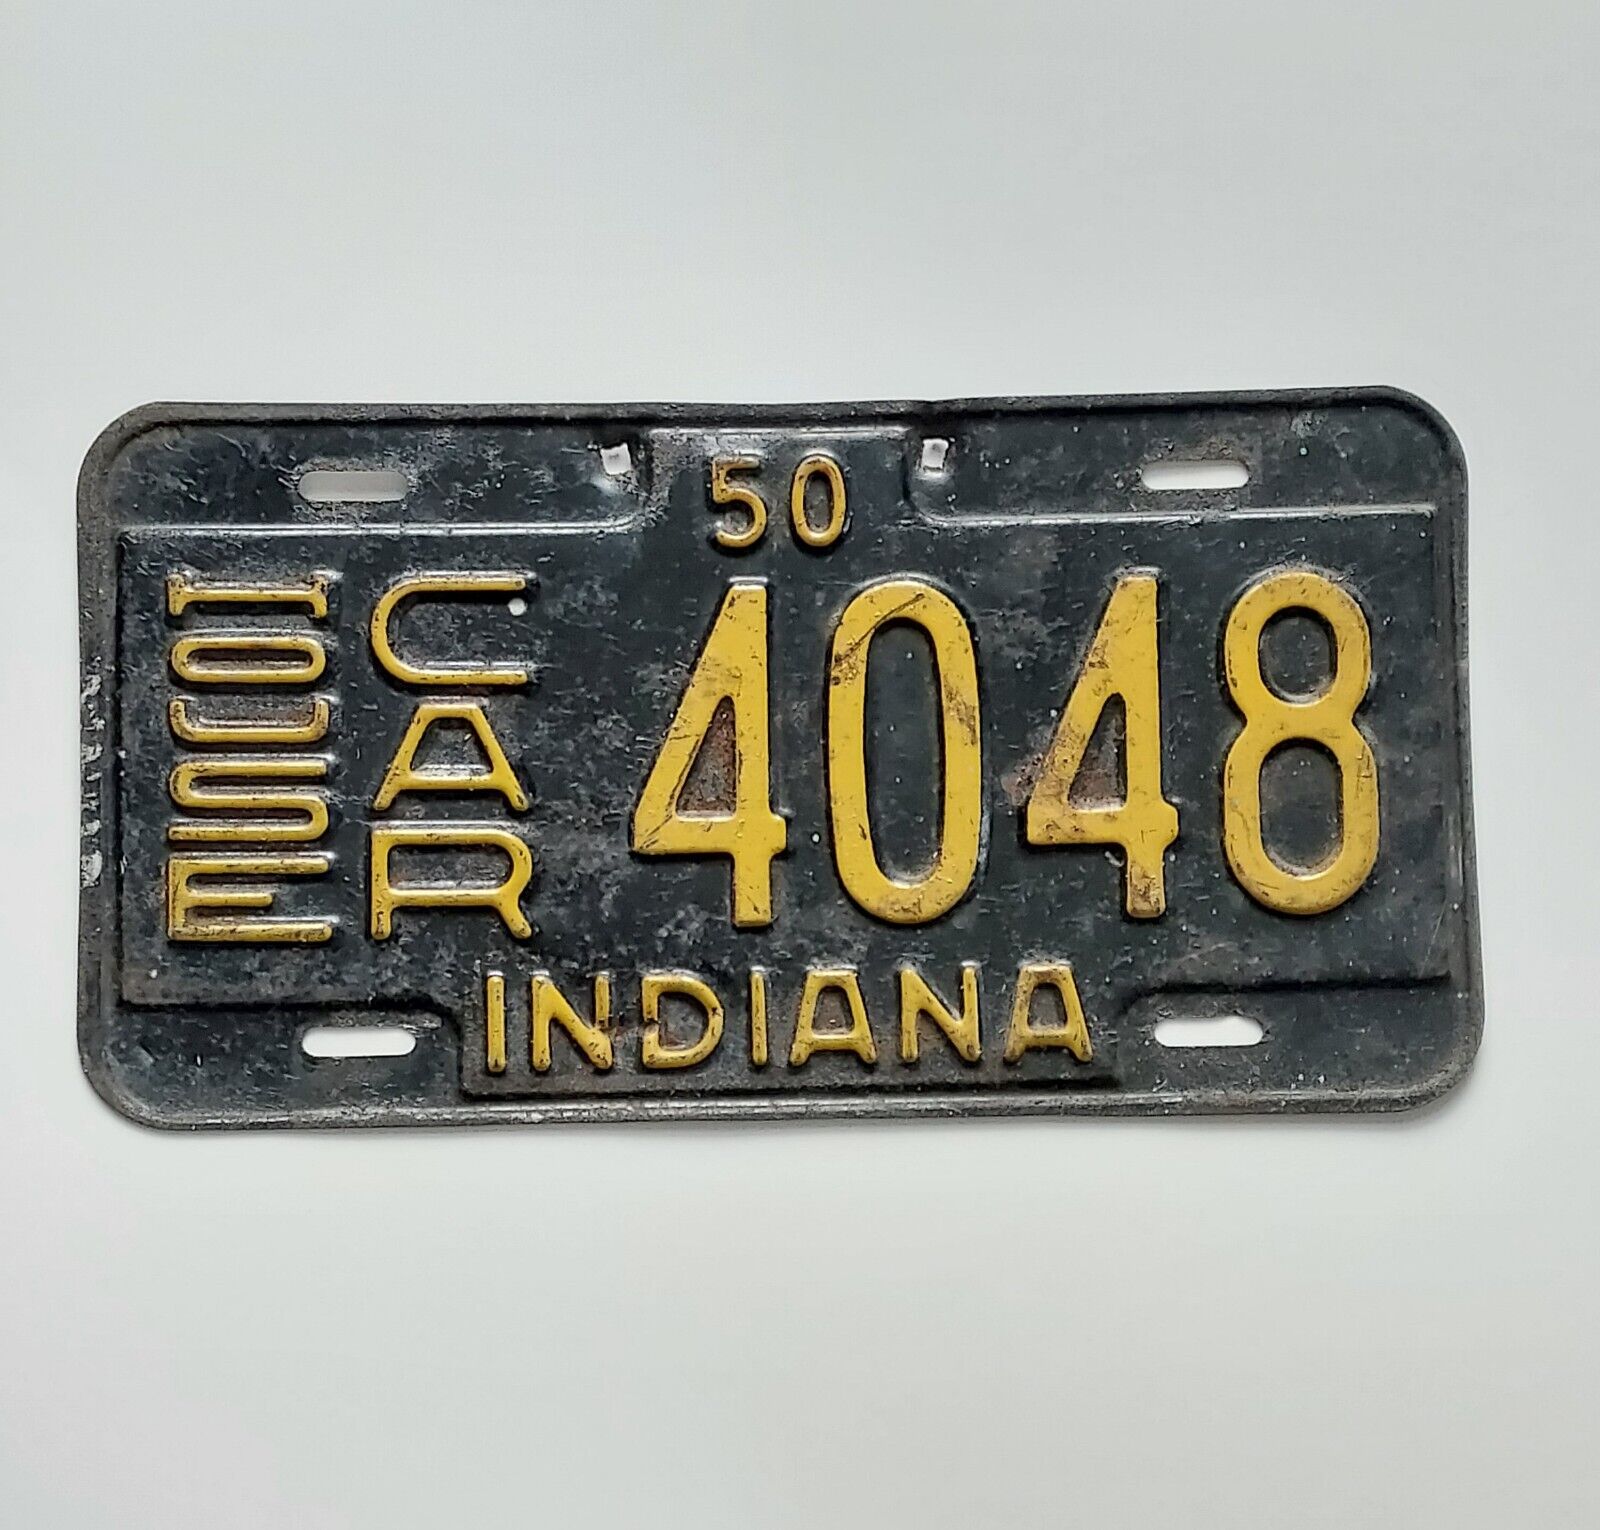 Rare 1950 Indiana RV Mobile Home License Plate